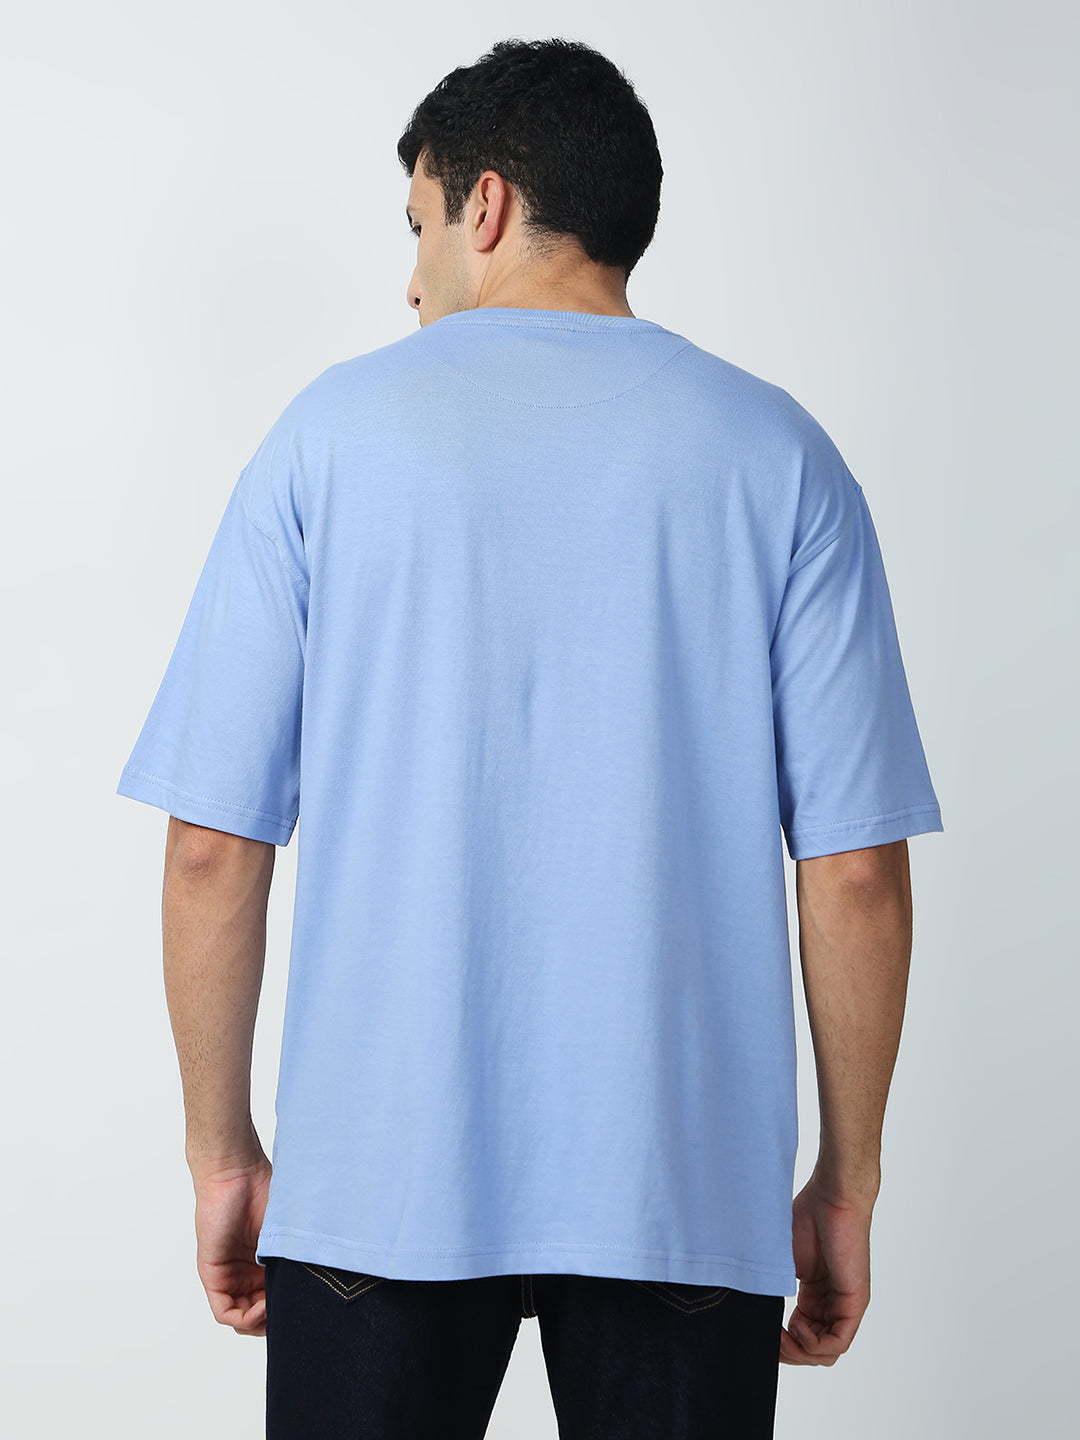 Buy Blamblack Men's Baggy Powder Blue Color Front Printed Round Neck T-Shirt